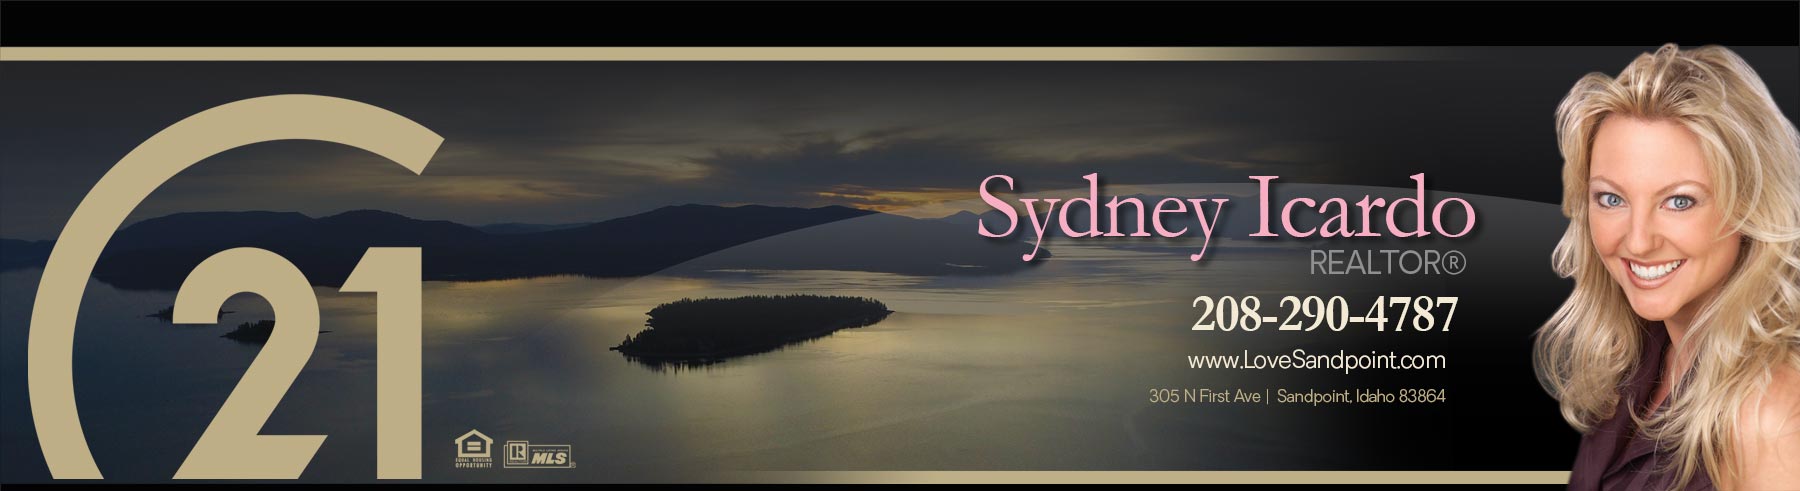 Sydney Icardo North Idaho Real Estate Agent for Century 21 RiverStone locatedd in Sandpoint, Idaho - 208-290-4787